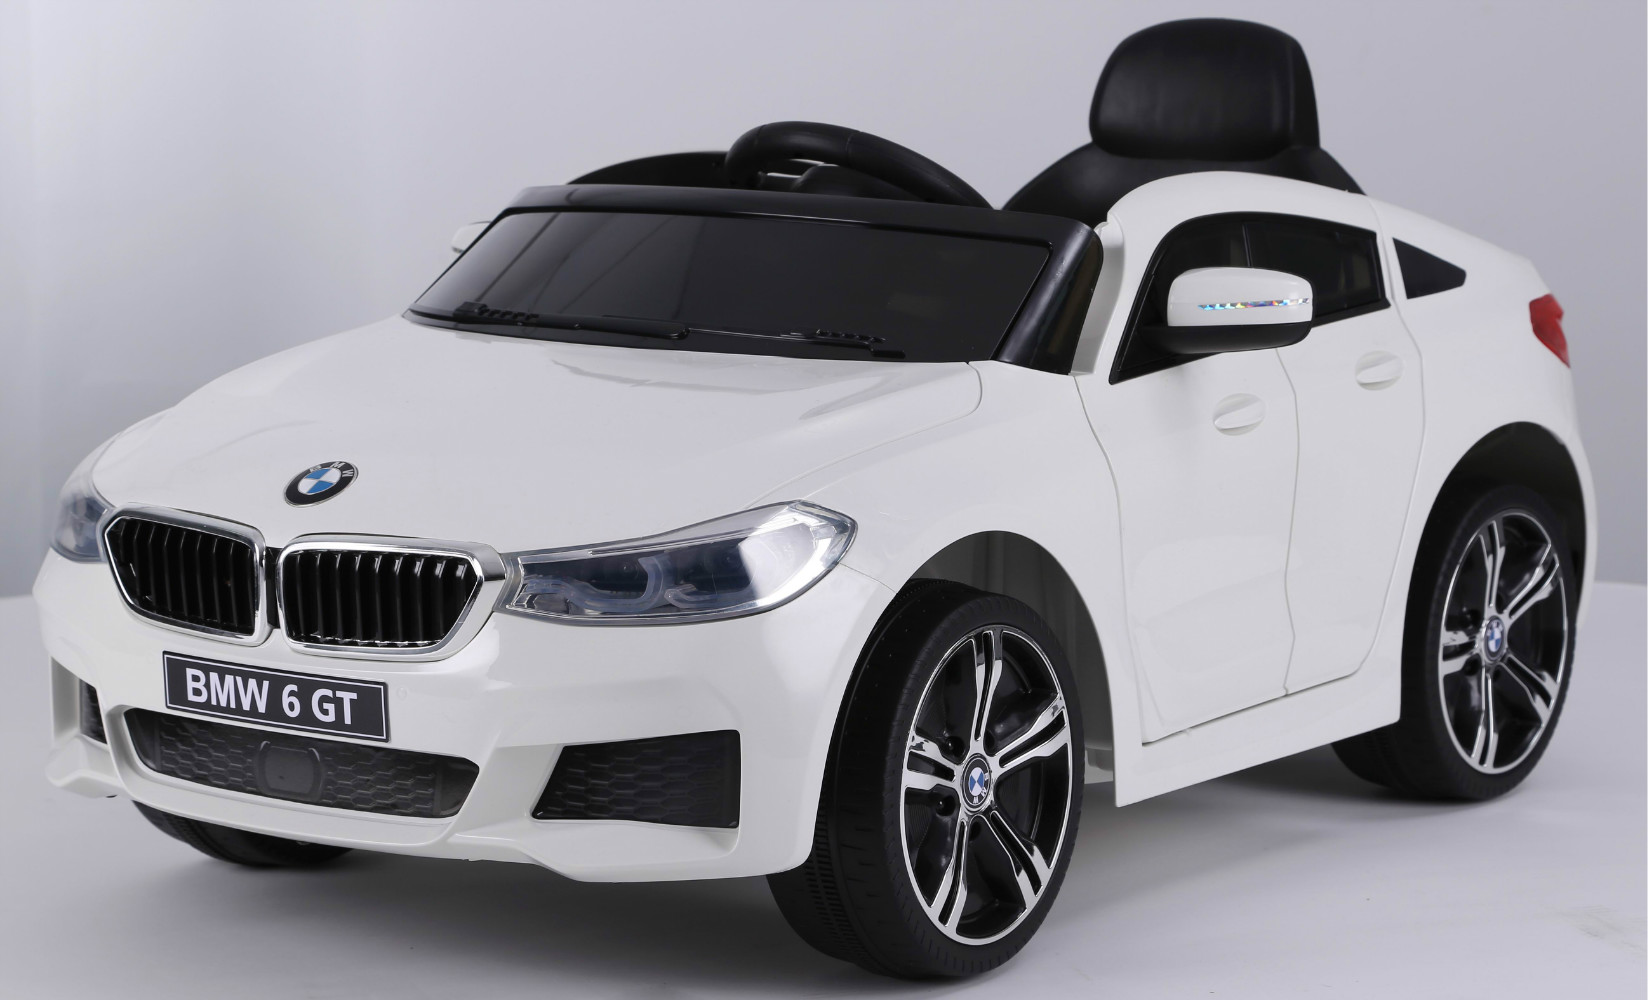 WHITE BMW GT 6 SERIES LICENSED KIDS ELECTRIC 12V RIDE ON